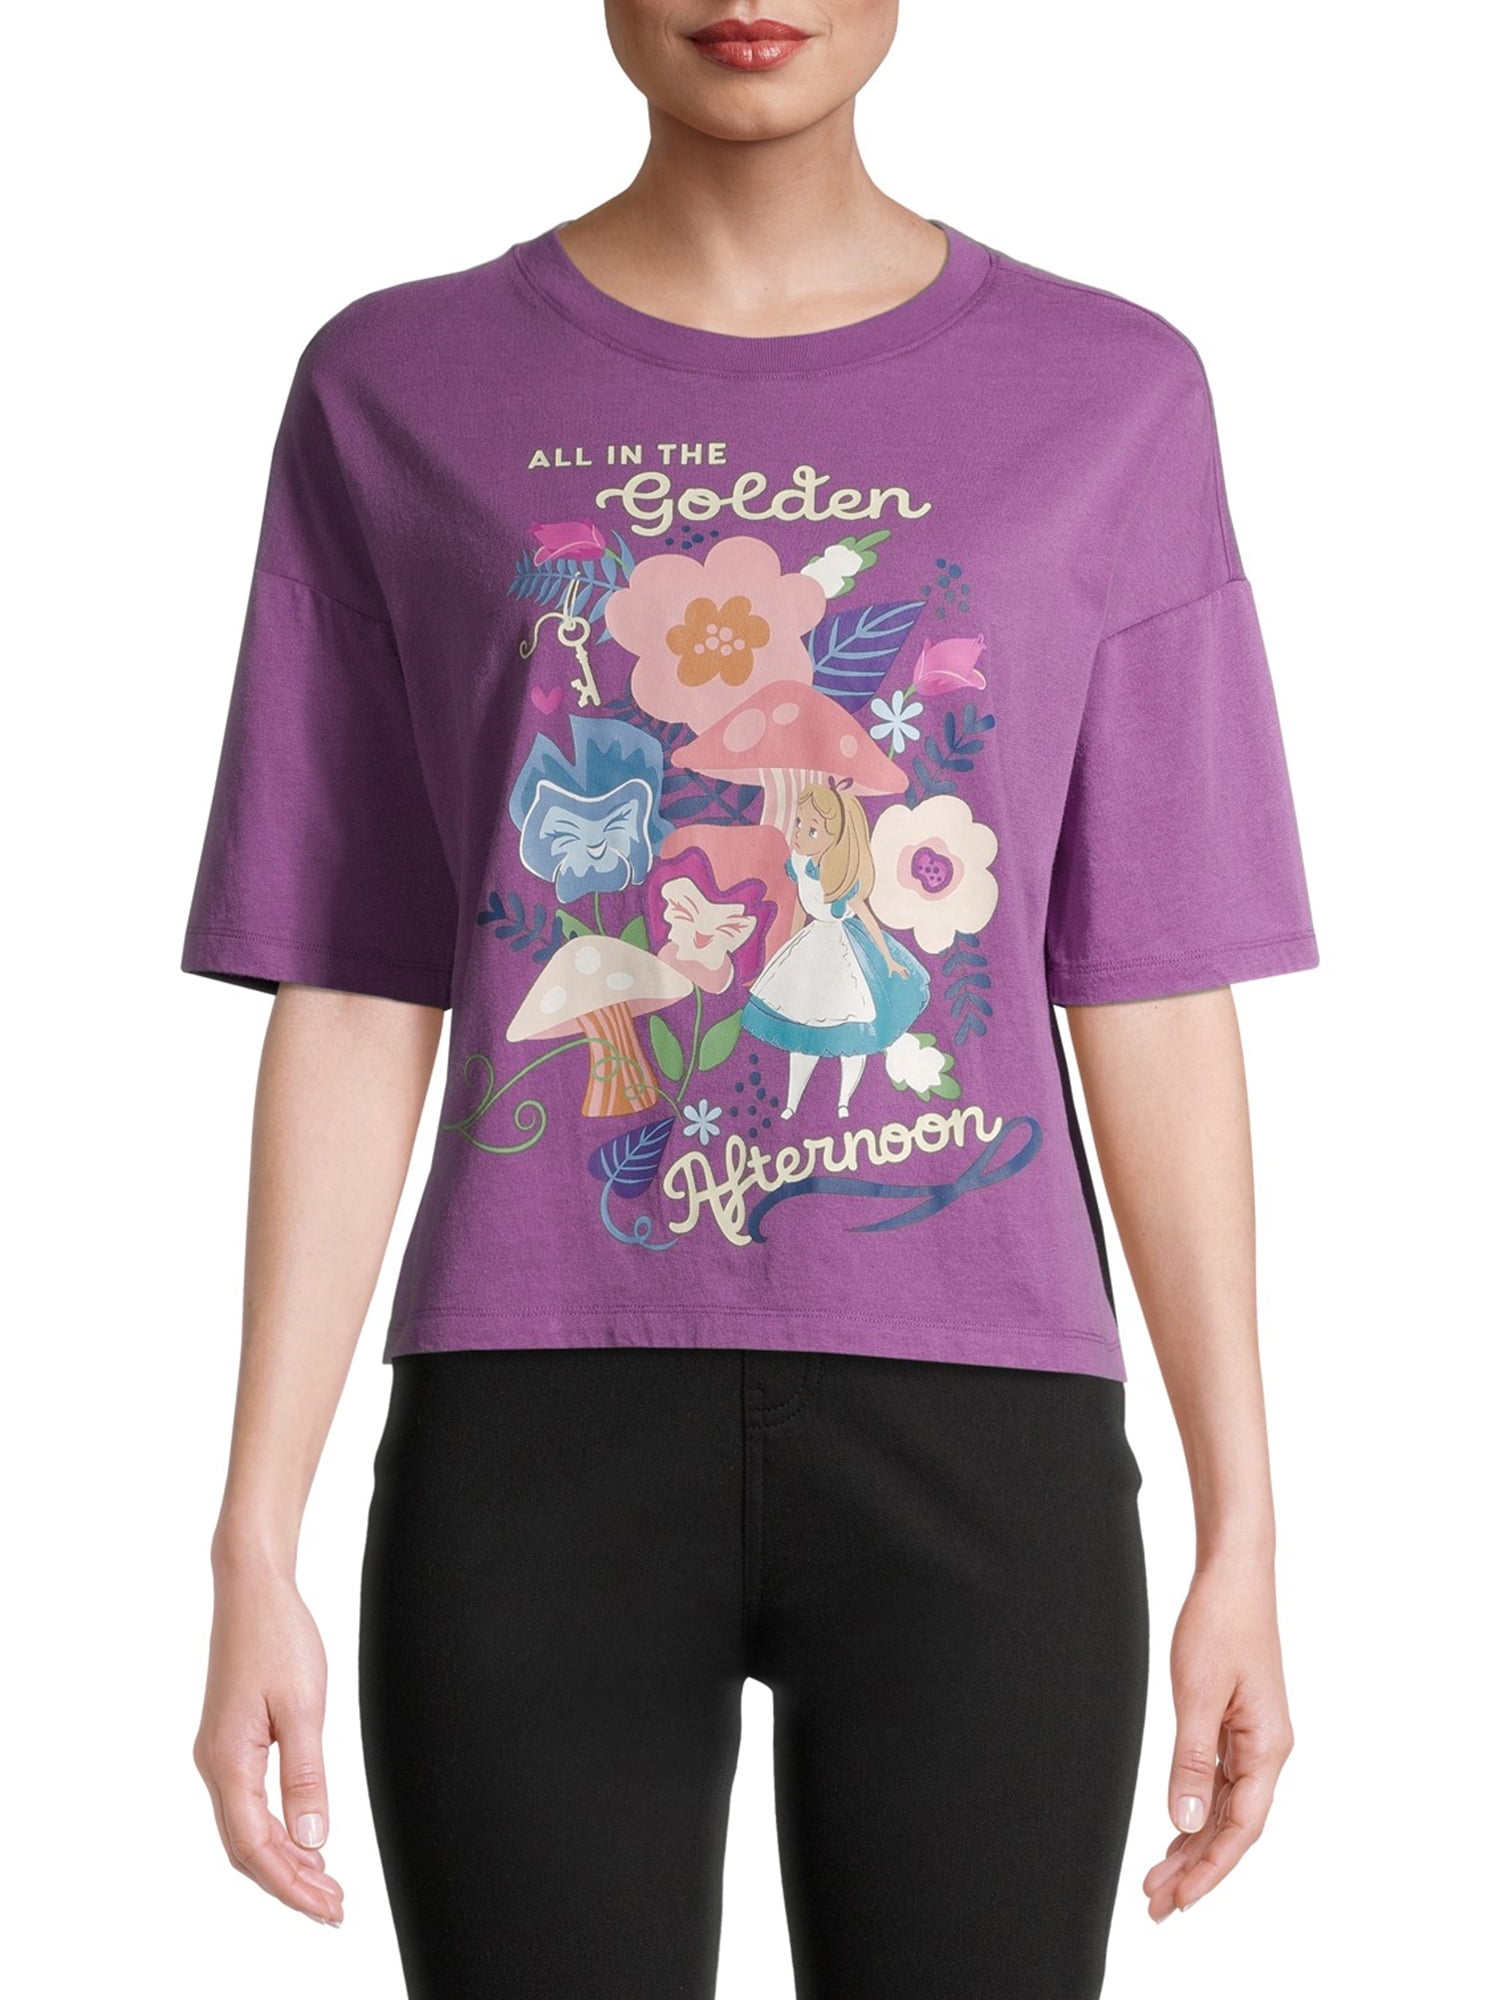 Disney Tshirt Alice In Wonderland Shirt Disney Lover Gift Shirt For Kid Disney Princess Shirt Disney Movie Shirt Disney World Shirt